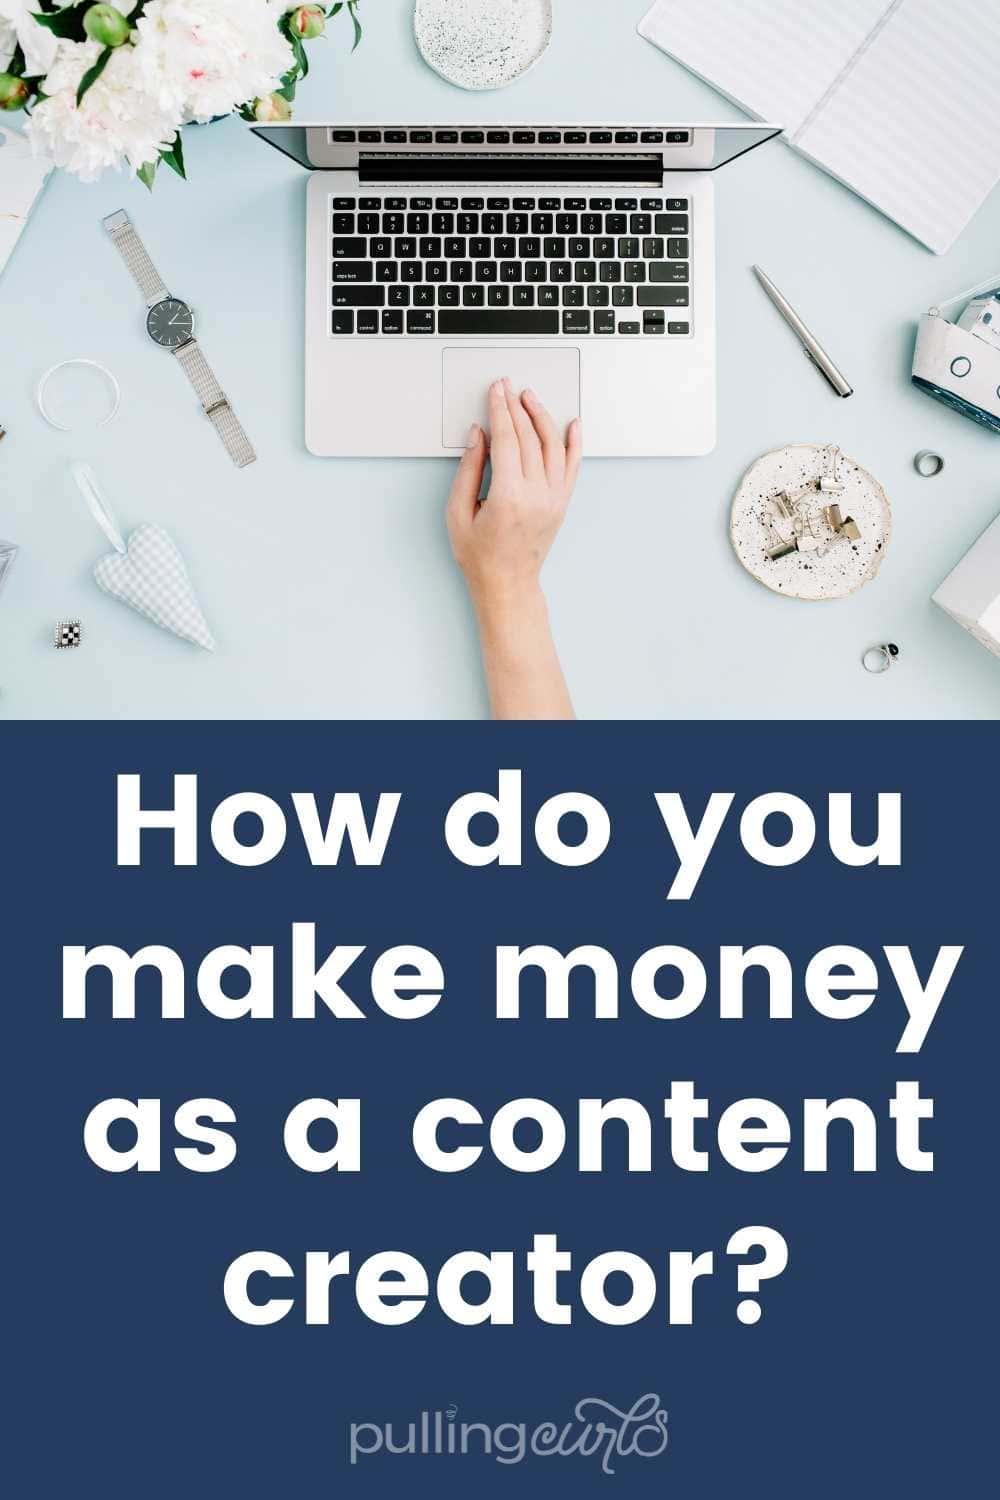 laptop / how do you make money as a content creator? via @pullingcurls